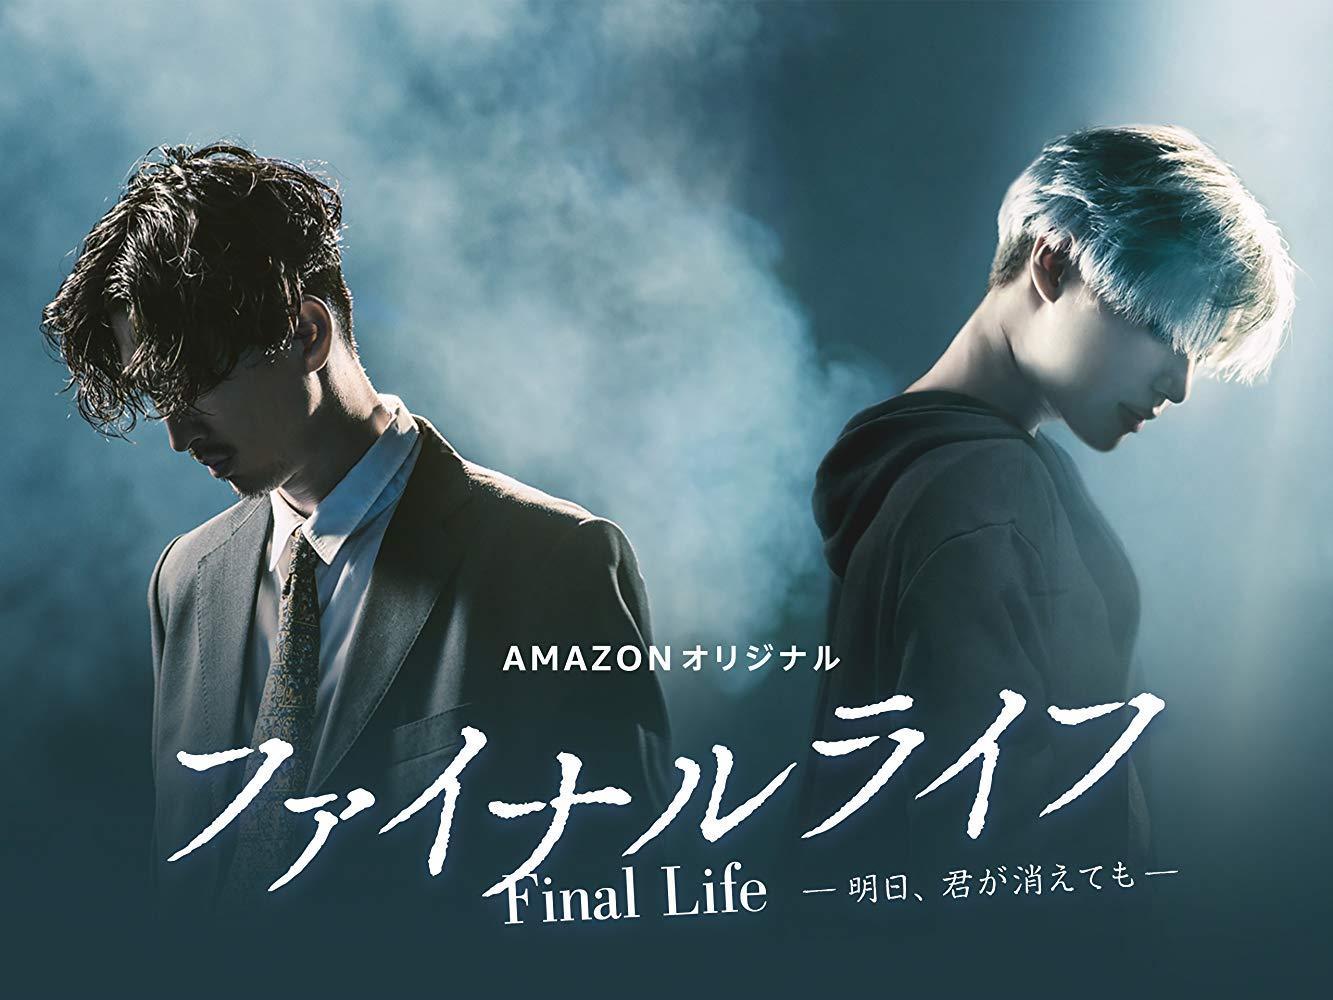 Final Life (TV Series) - Poster / Main Image